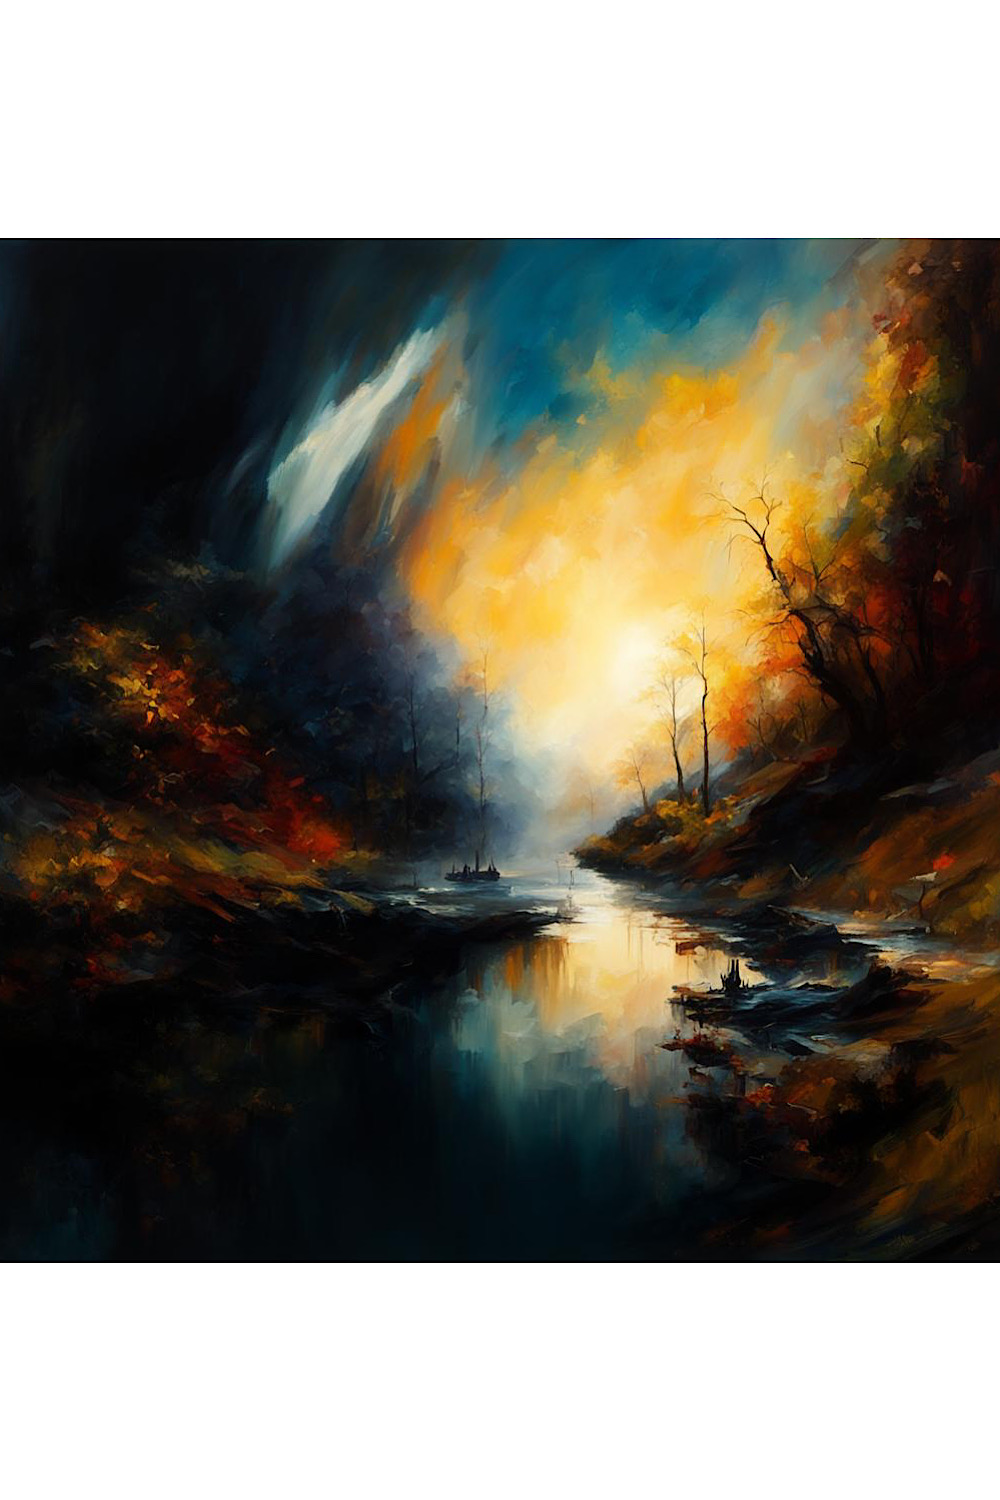 Oil painting "Landscape" pinterest preview image.